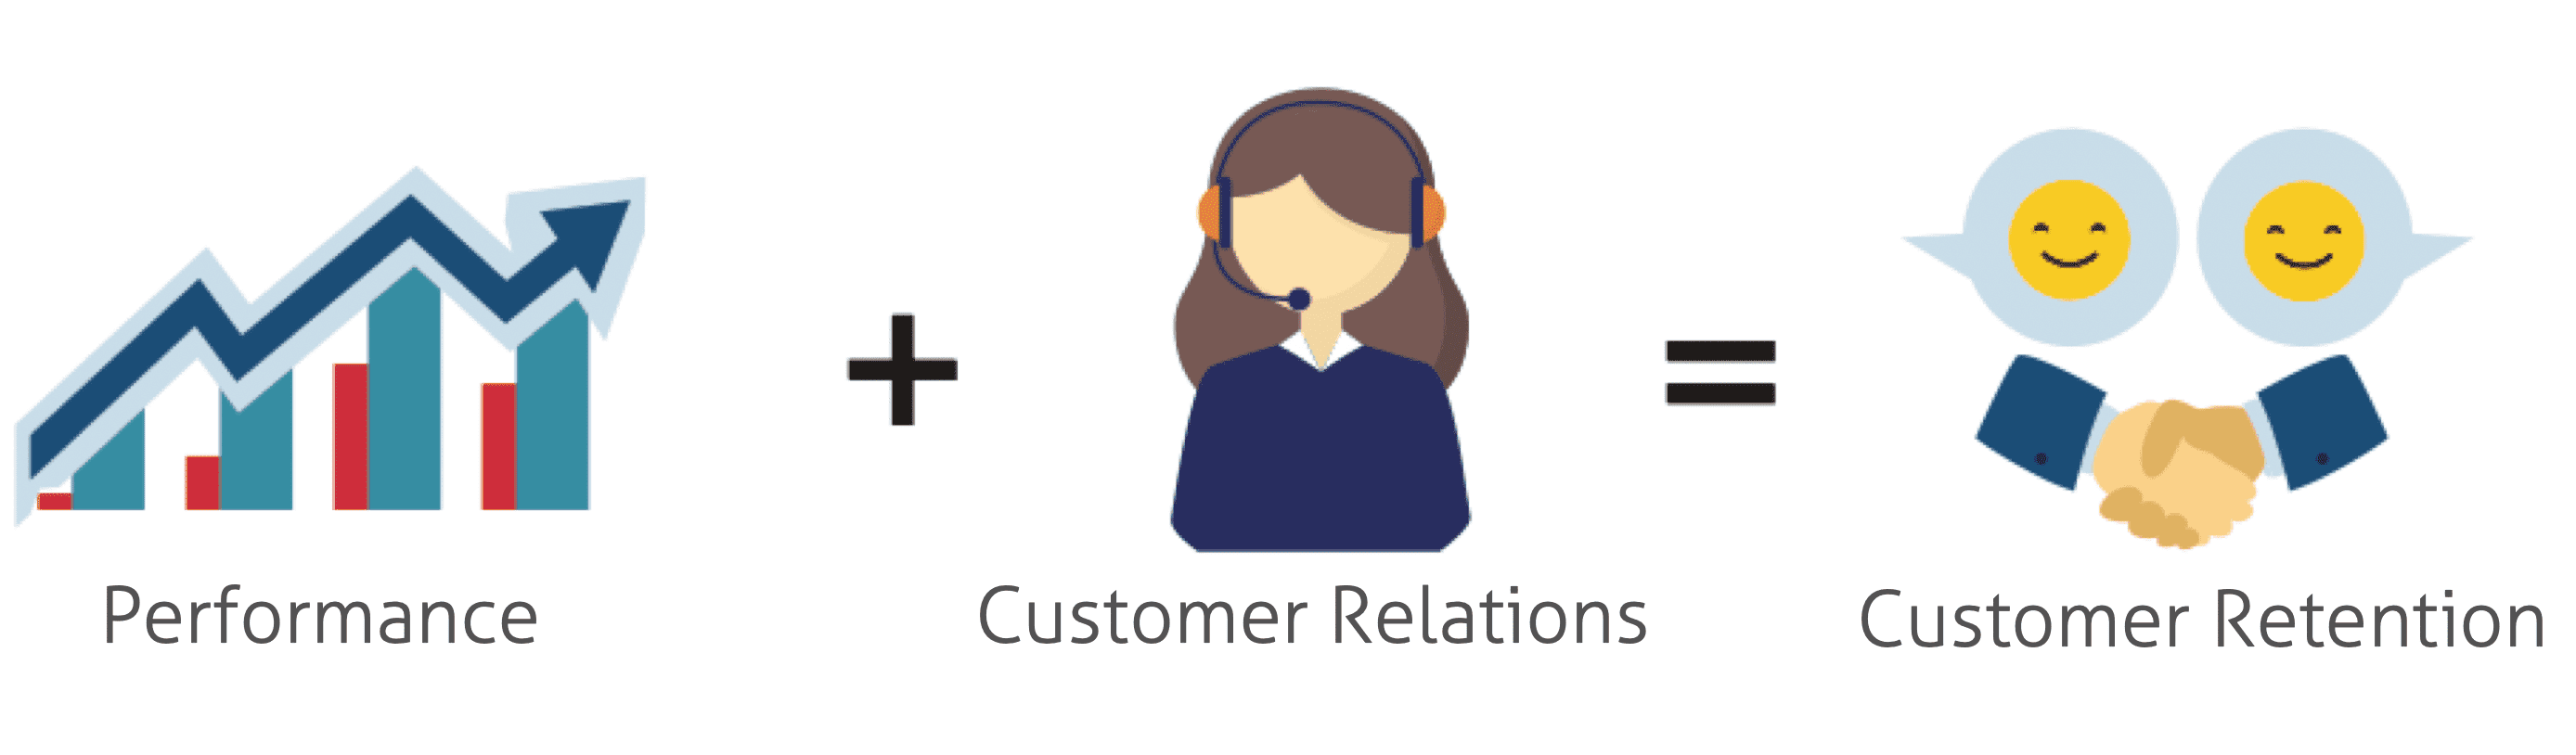 customer-retention-1-min